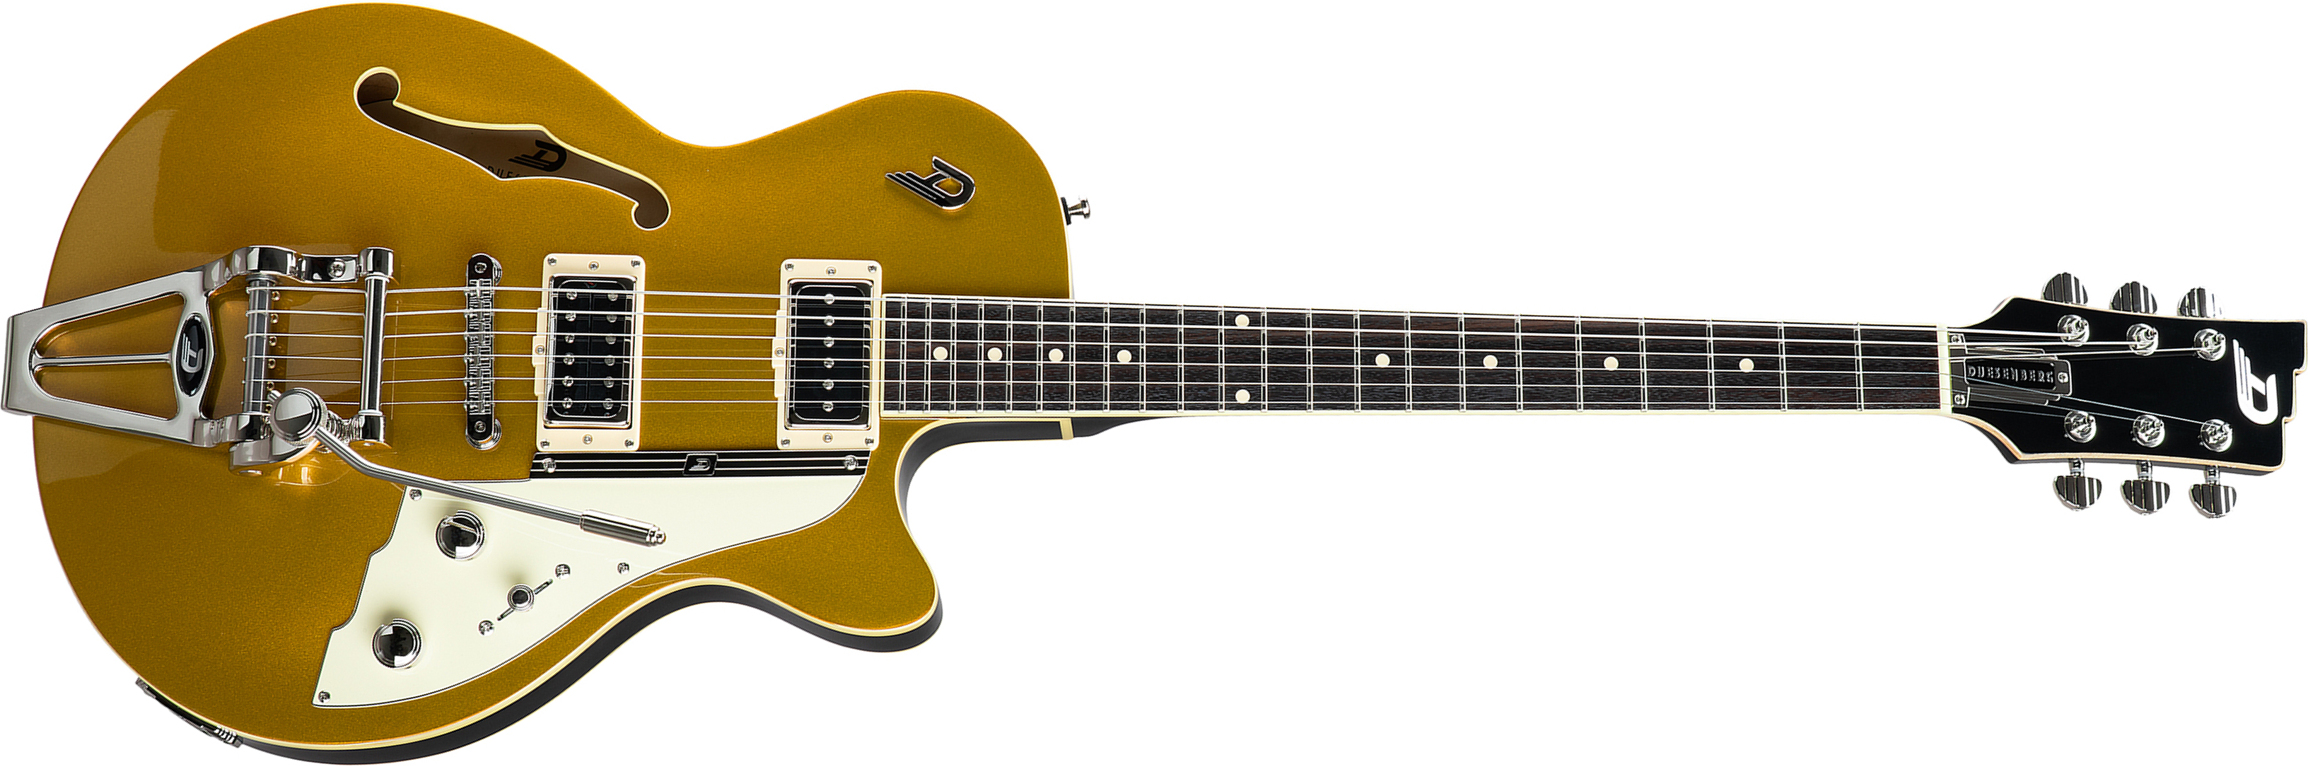 Duesenberg Starplayer Tv Hs Trem Rw - Gold Top - Semi-hollow electric guitar - Main picture